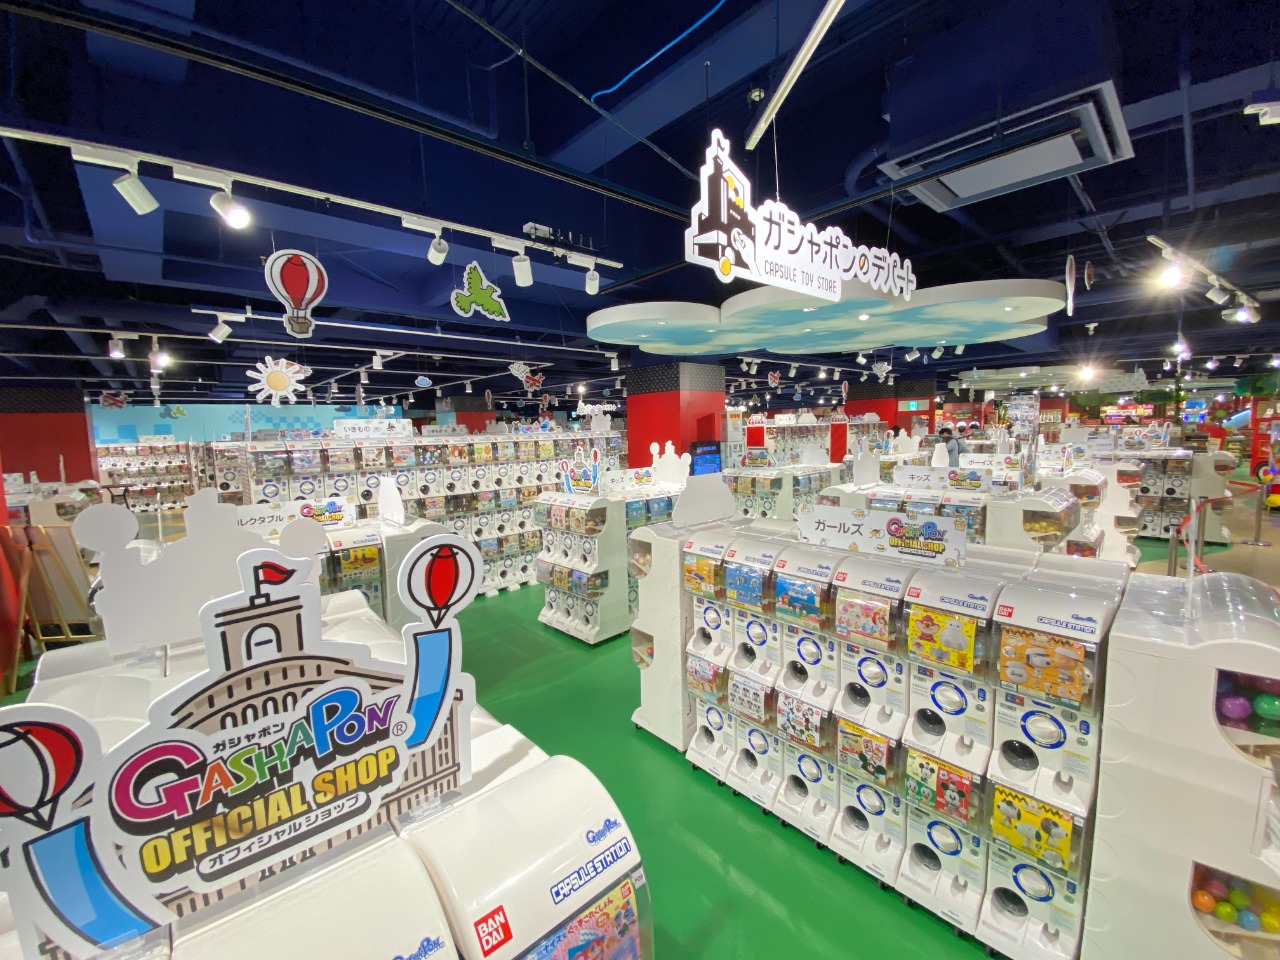 Gashapon Department Store (Capsule Toys Store)